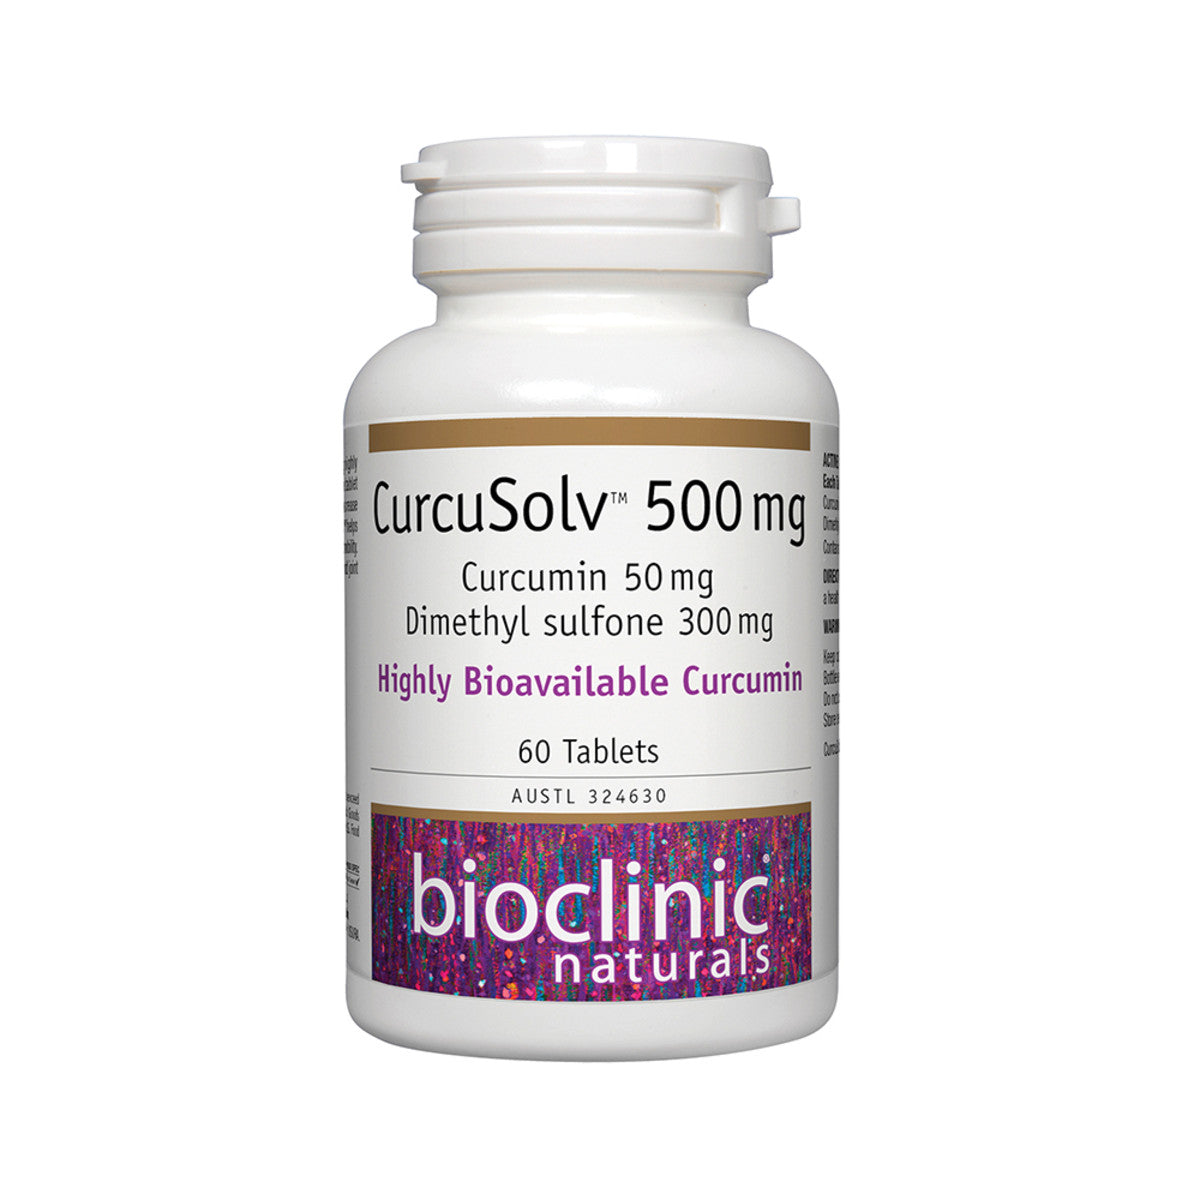 Bioclinic Naturals - CurcuSolv 500mg